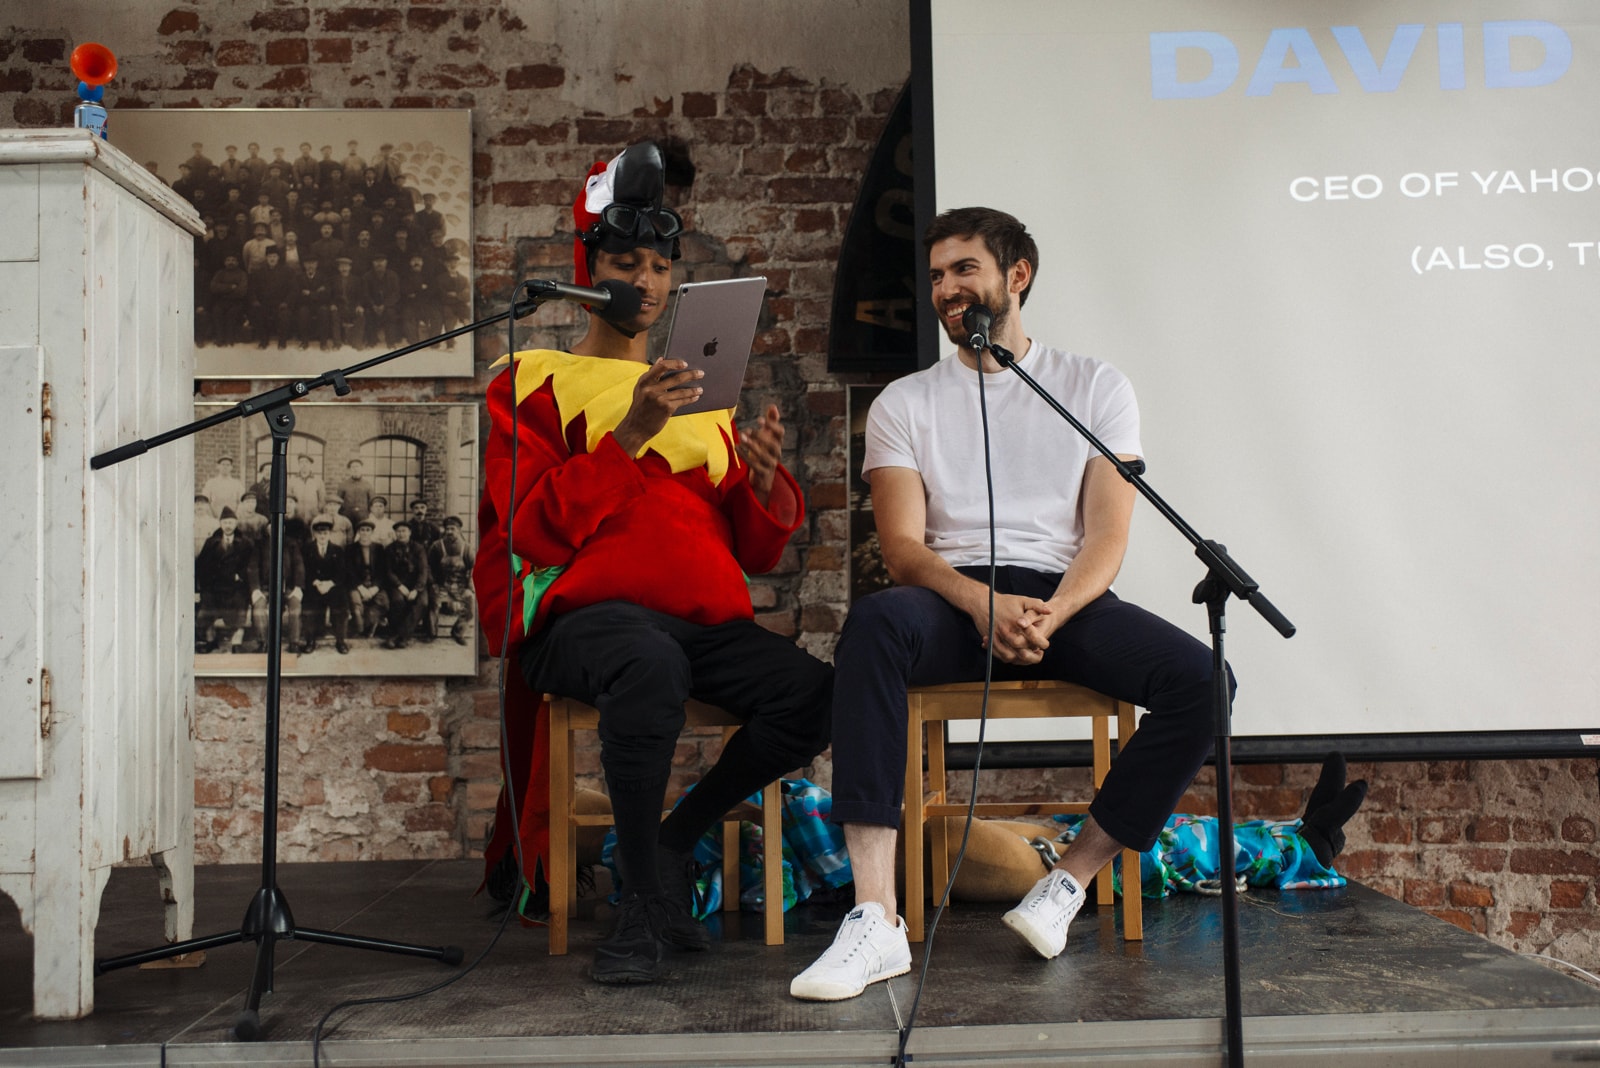 Pasqual on stage, wearing a bird suit, interviewing David Karp.